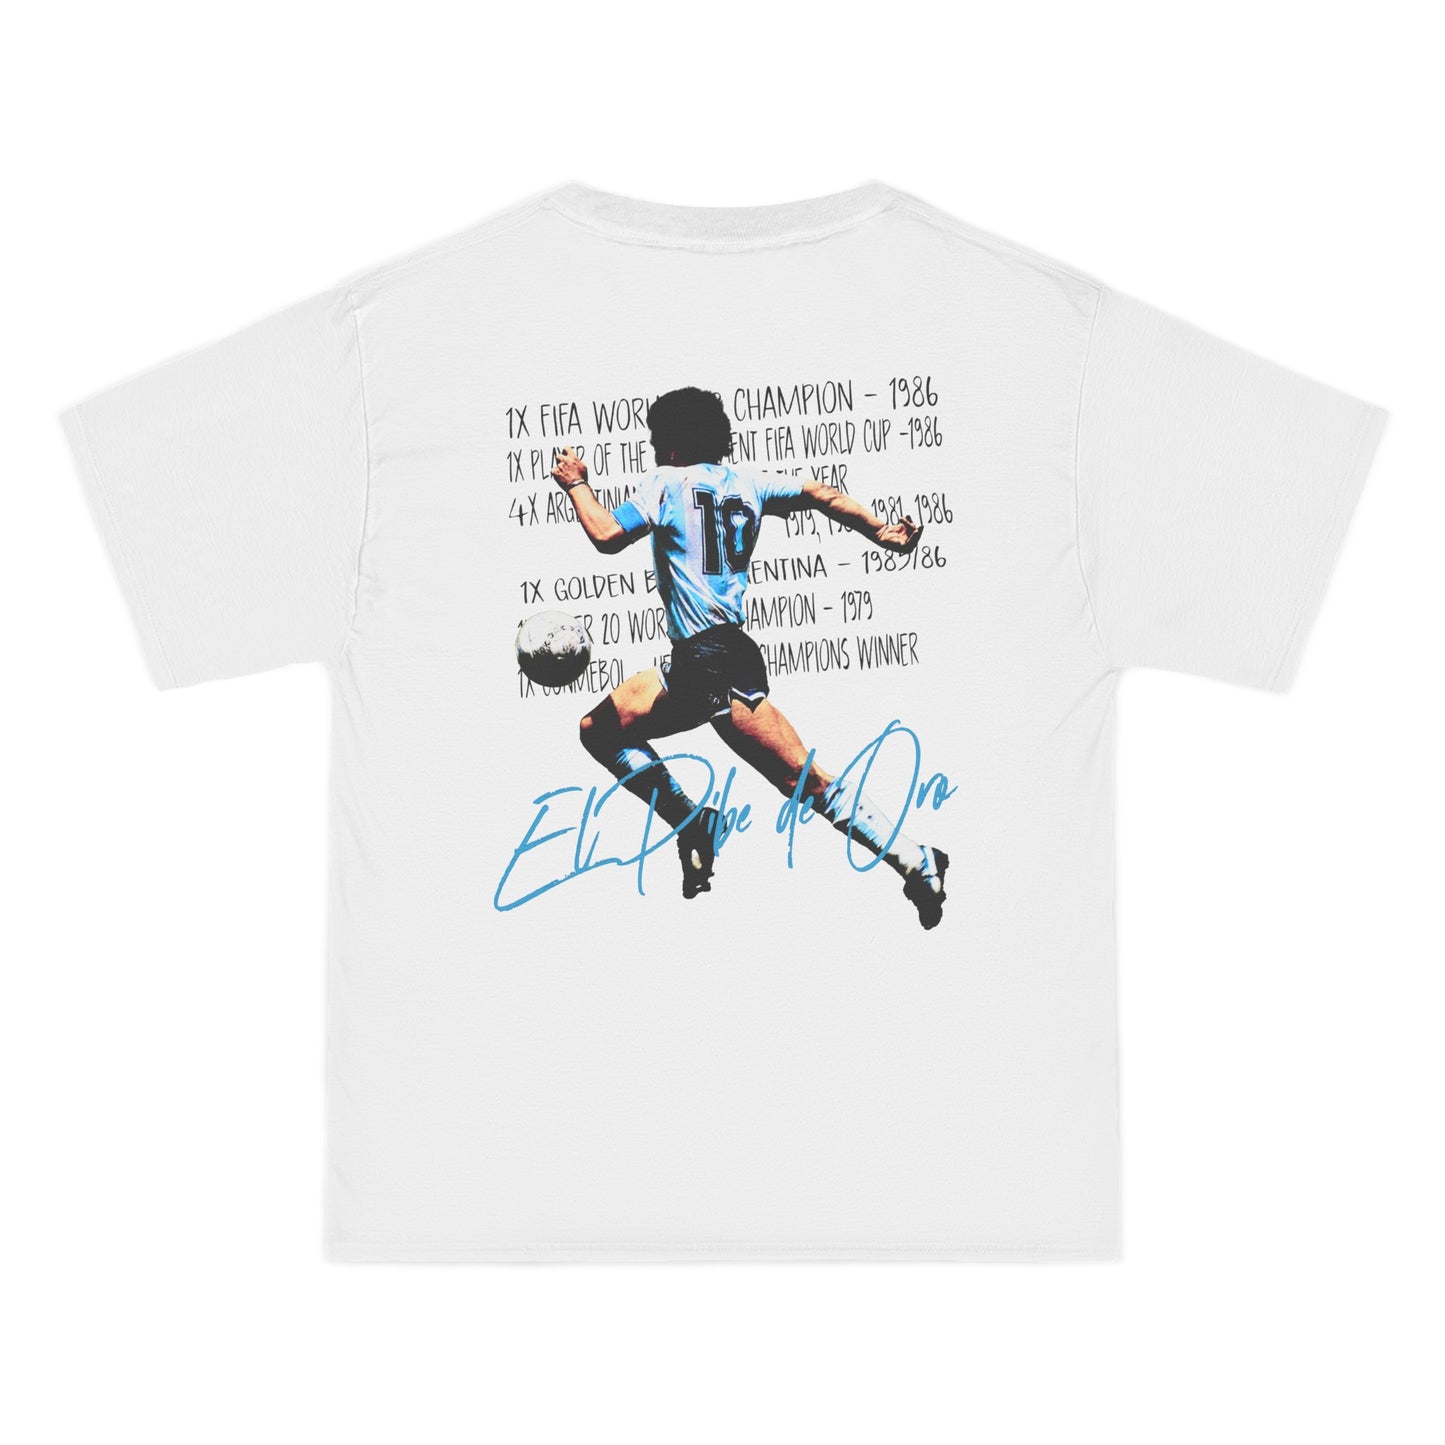 Diego Maradona "El Pibe de Oro" Argentina Graphic T-Shirt